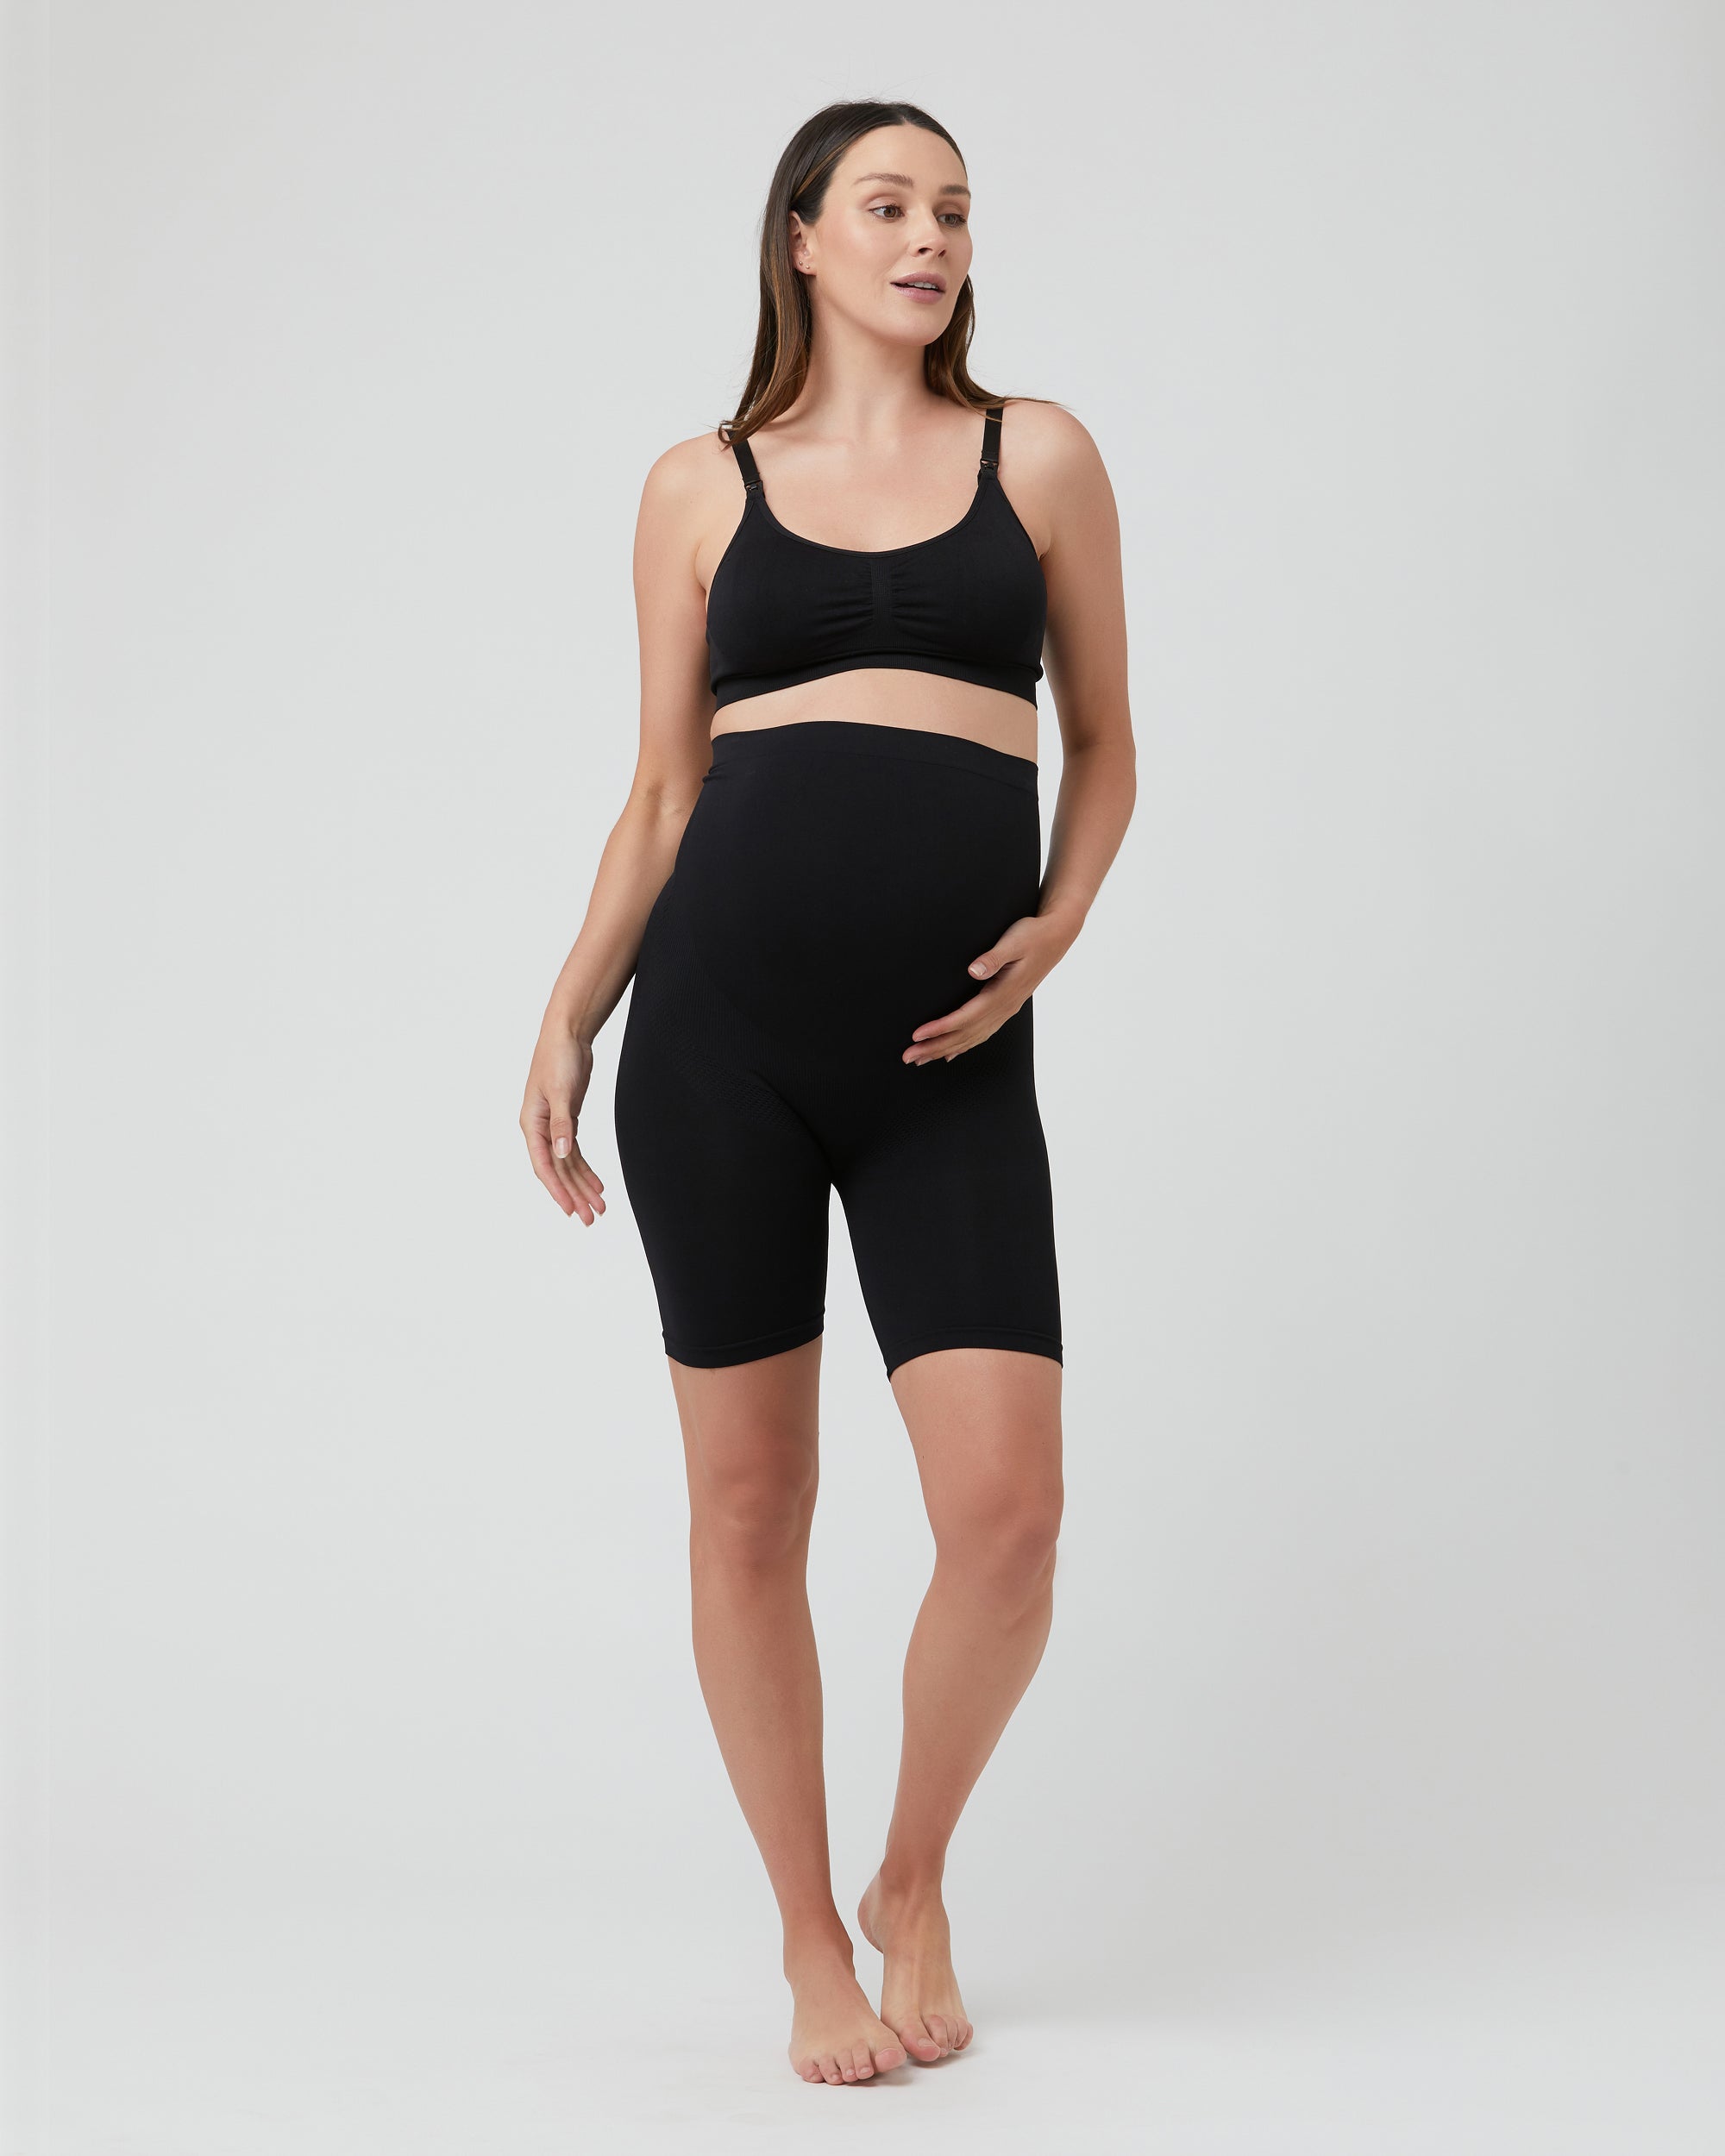 nsendm Female Underwear Adult Running Sports Bras Bras for Breastfeeding  Strip Support Comfort Maternity Seamless Soft Wirefree Pregnancy Bra(Black,  M) 